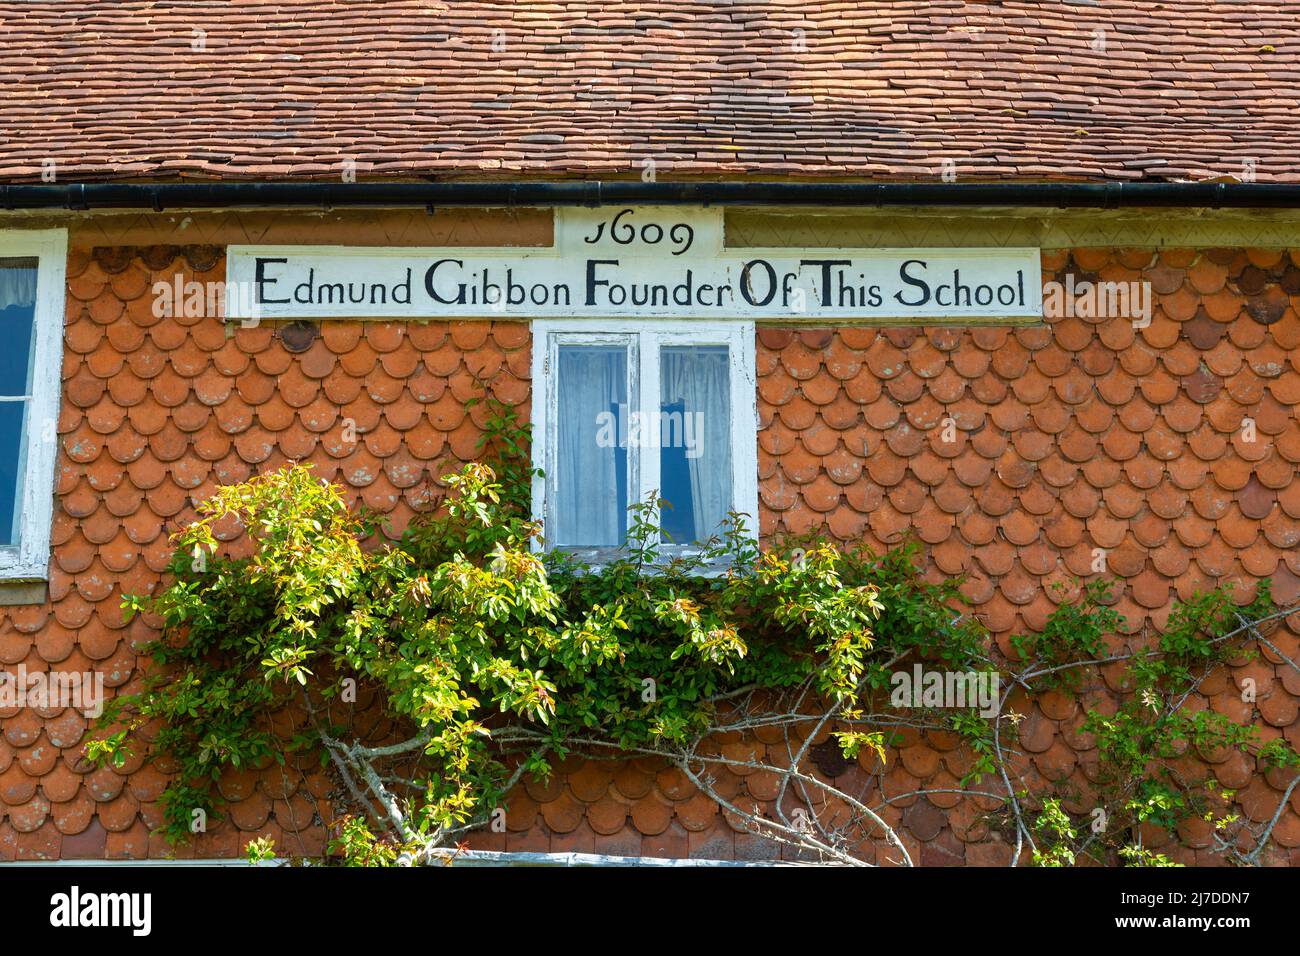 Benenden village, Edmund Gibbon founder of this school sign, 1609, kent, uk Stock Photo